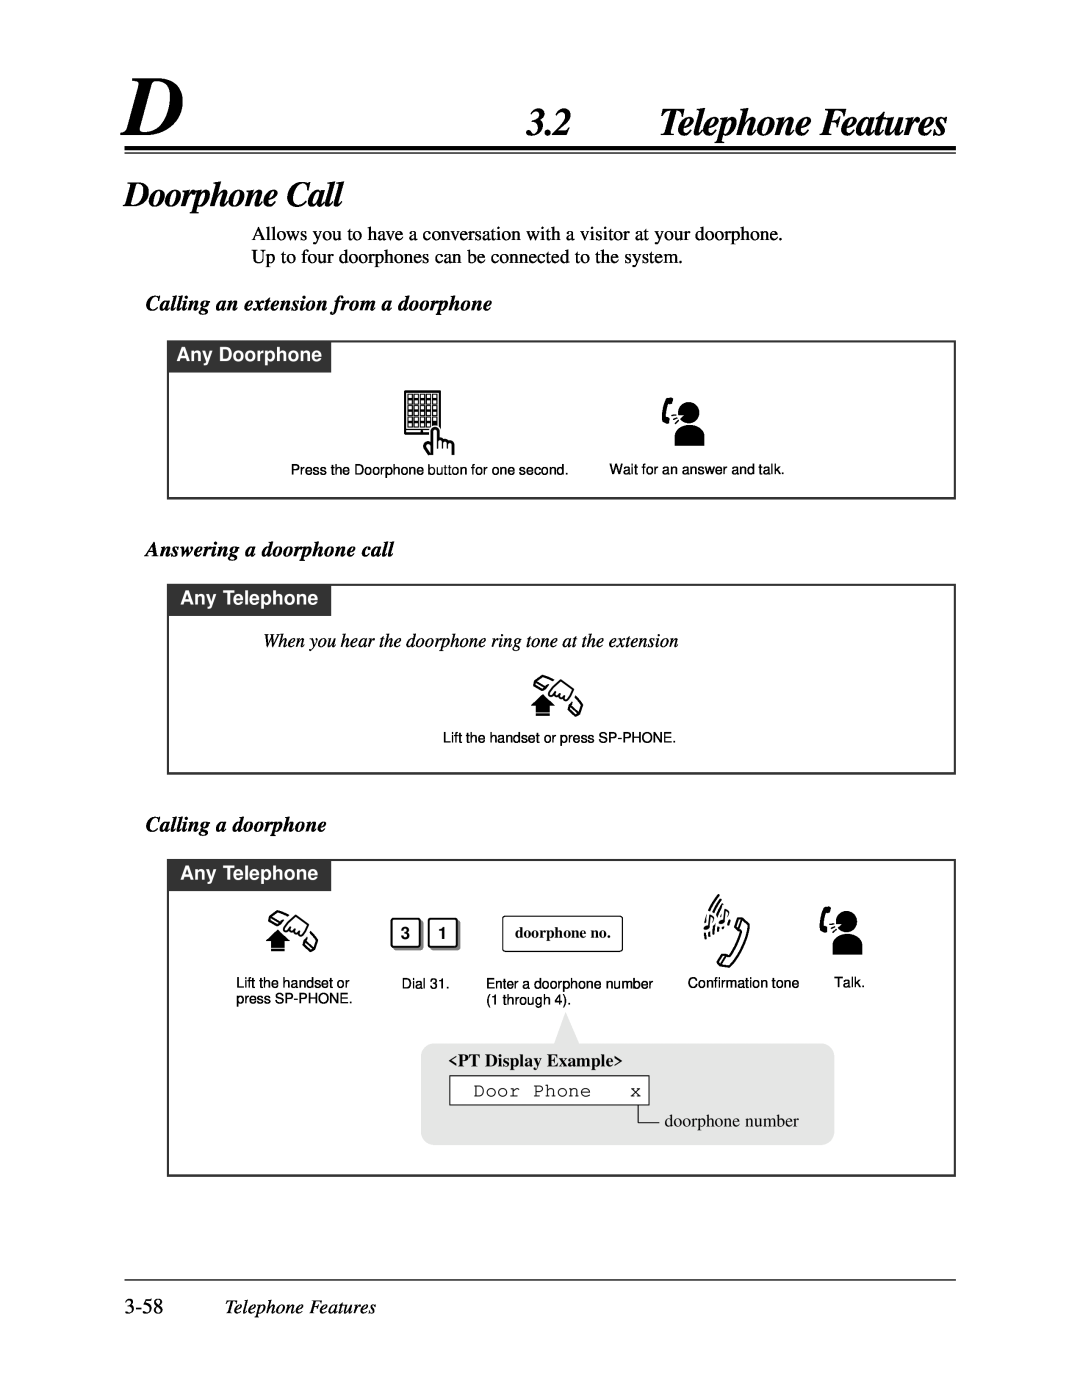 Panasonic KX-TA624 Doorphone Call, Calling an extension from a doorphone, Answering a doorphone call, Calling a doorphone 